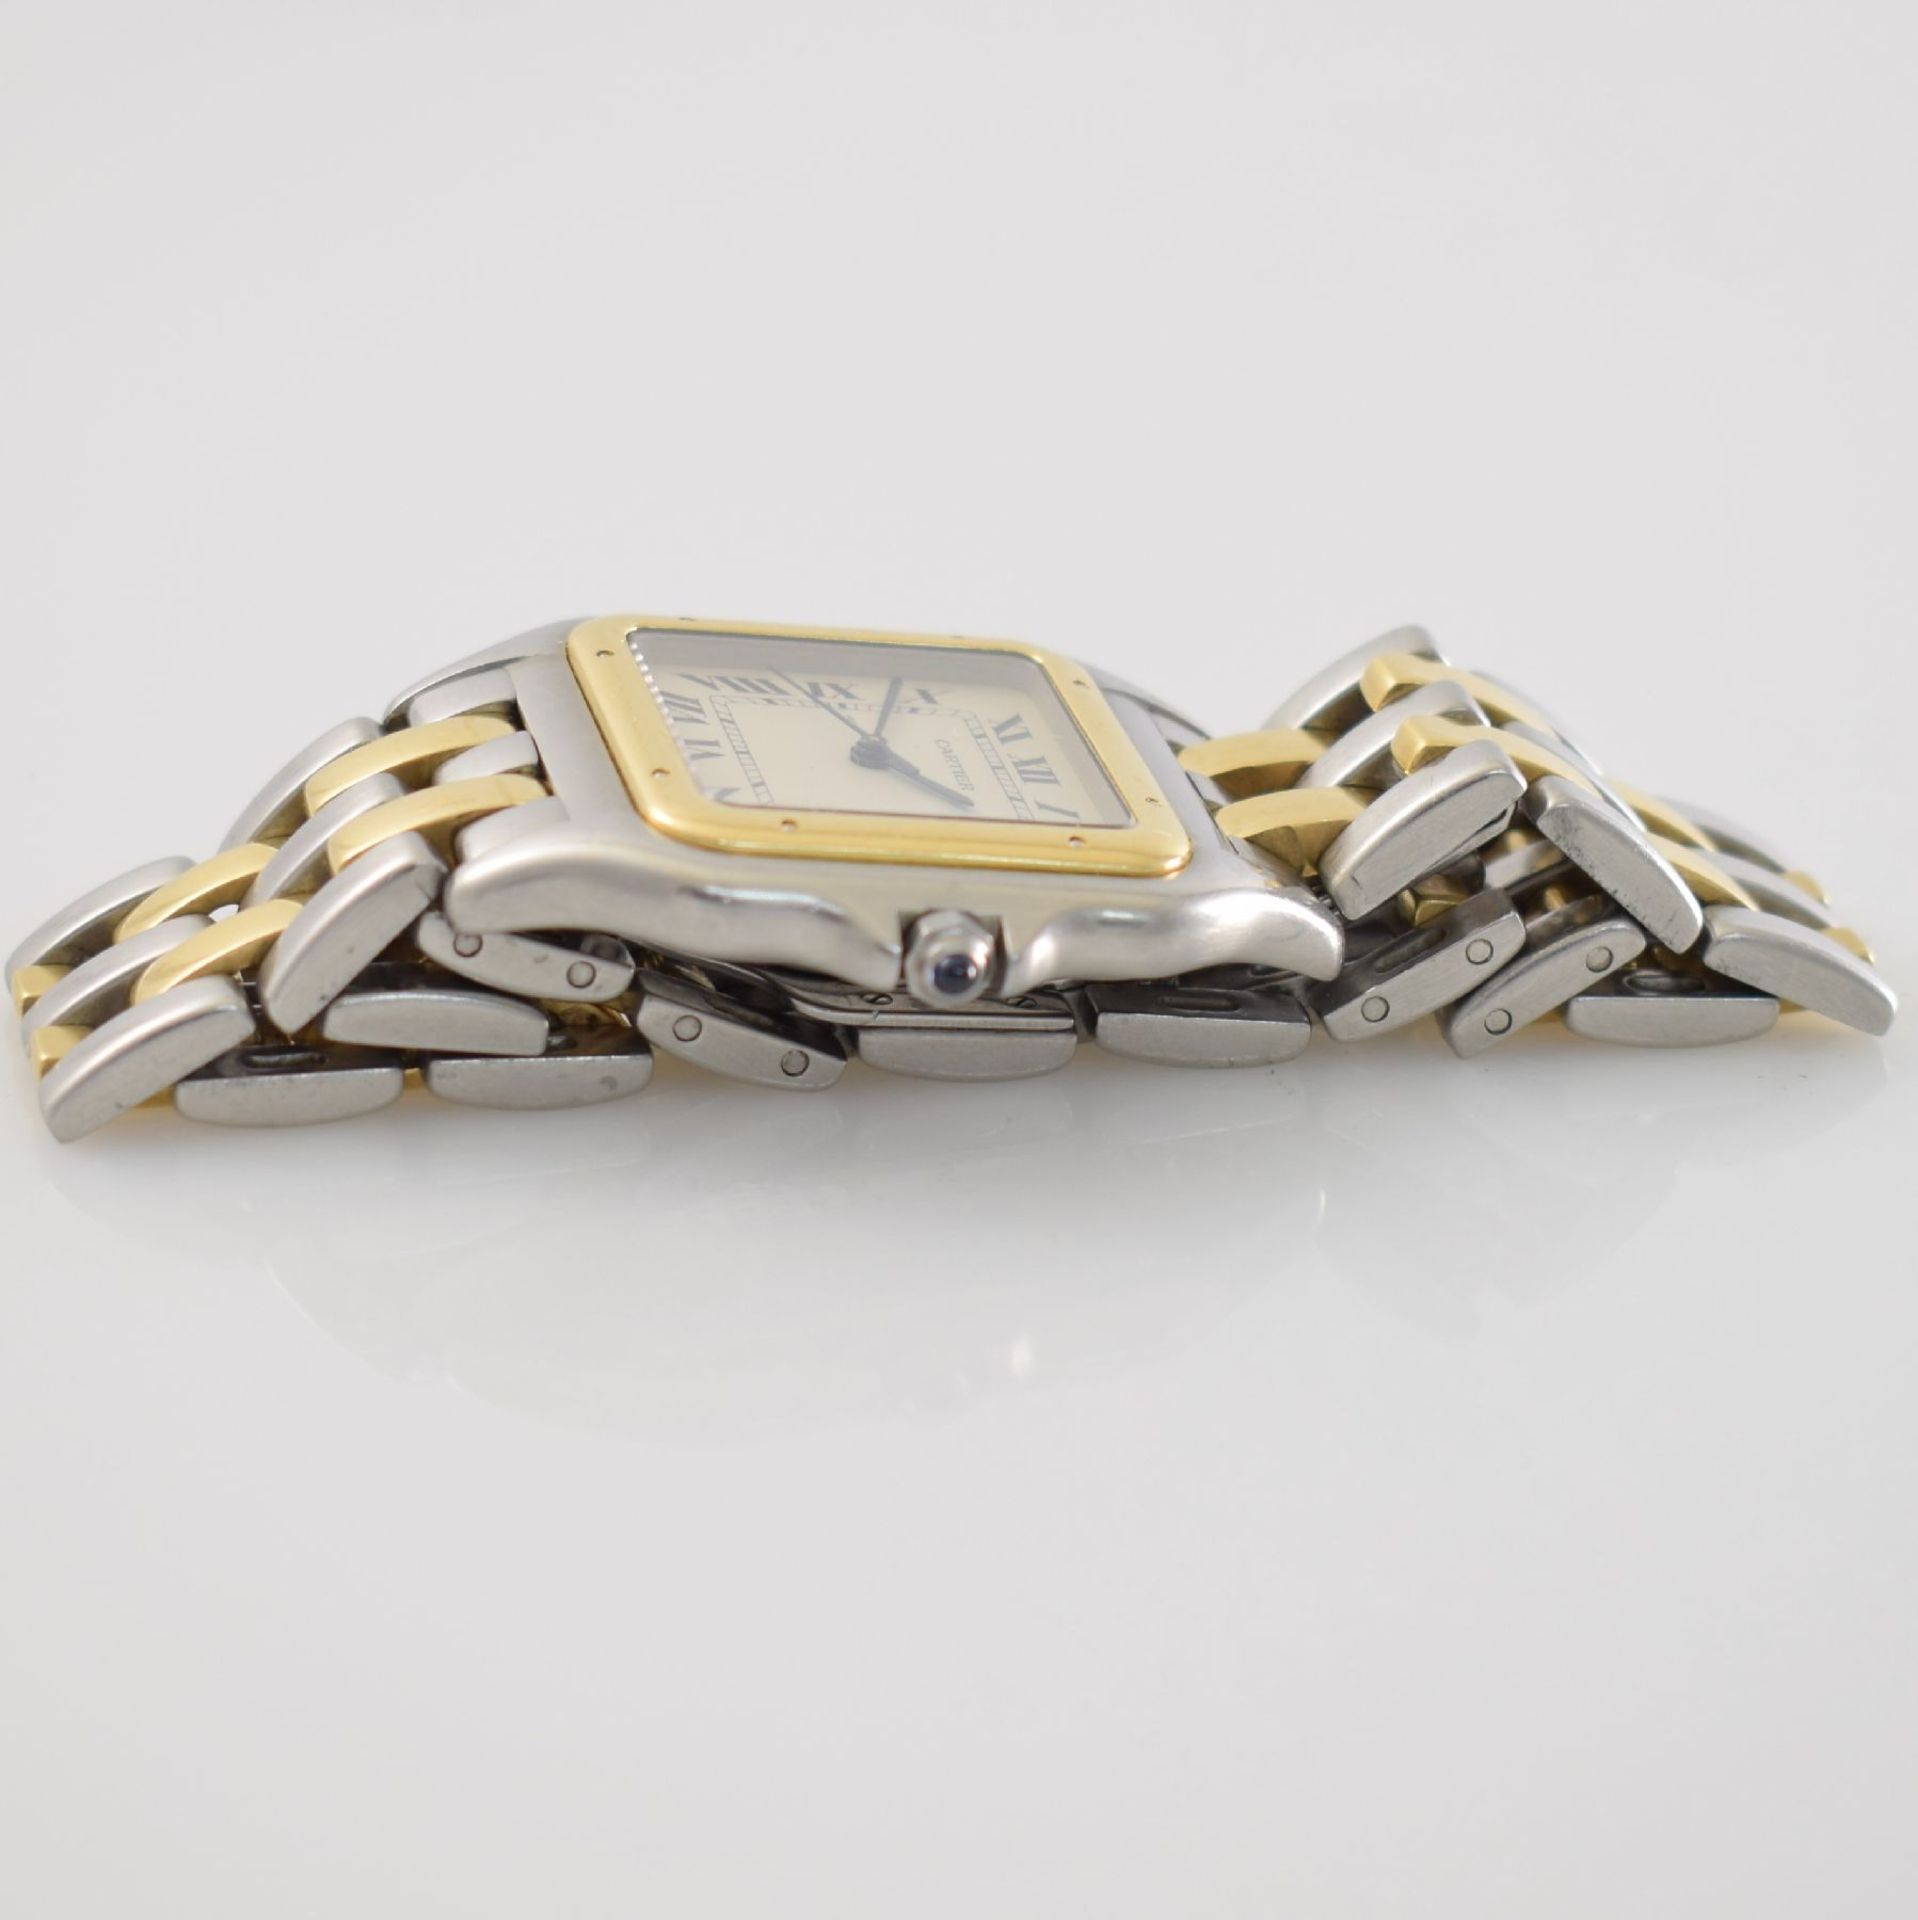 CARTIER Panthere Armbanduhr in GG 750/000 & Edelstahl, Schweiz um 2000, quarz, Boden 8-fach - Bild 6 aus 7